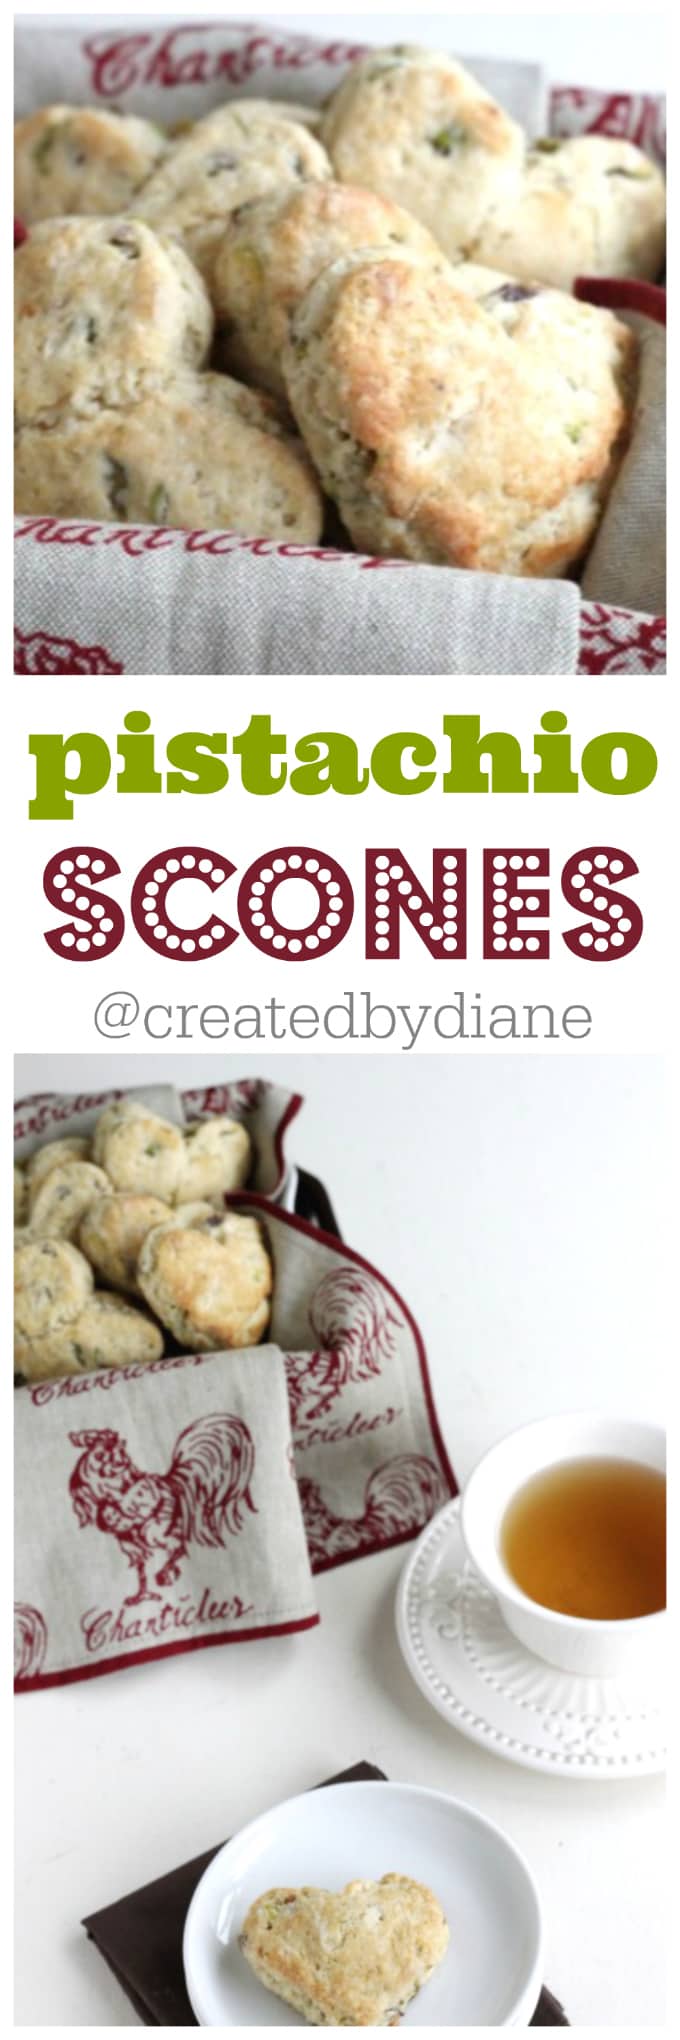 pistachio scones from @createdbydiane